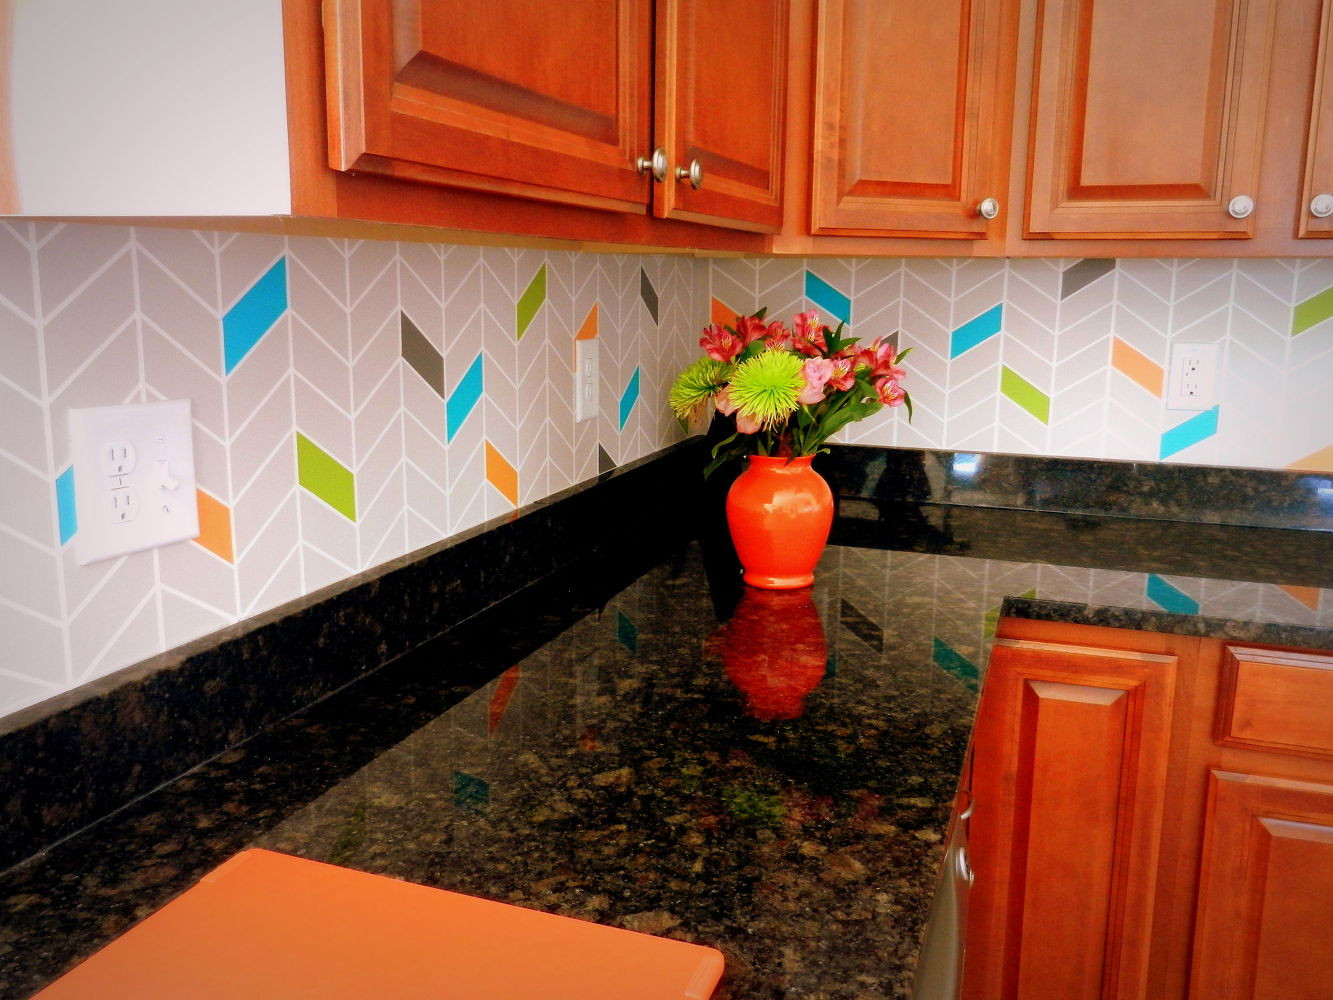 Best ideas about Kitchen Backsplash DIY
. Save or Pin 13 Incredible Kitchen Backsplash Ideas That Aren t Tile Now.